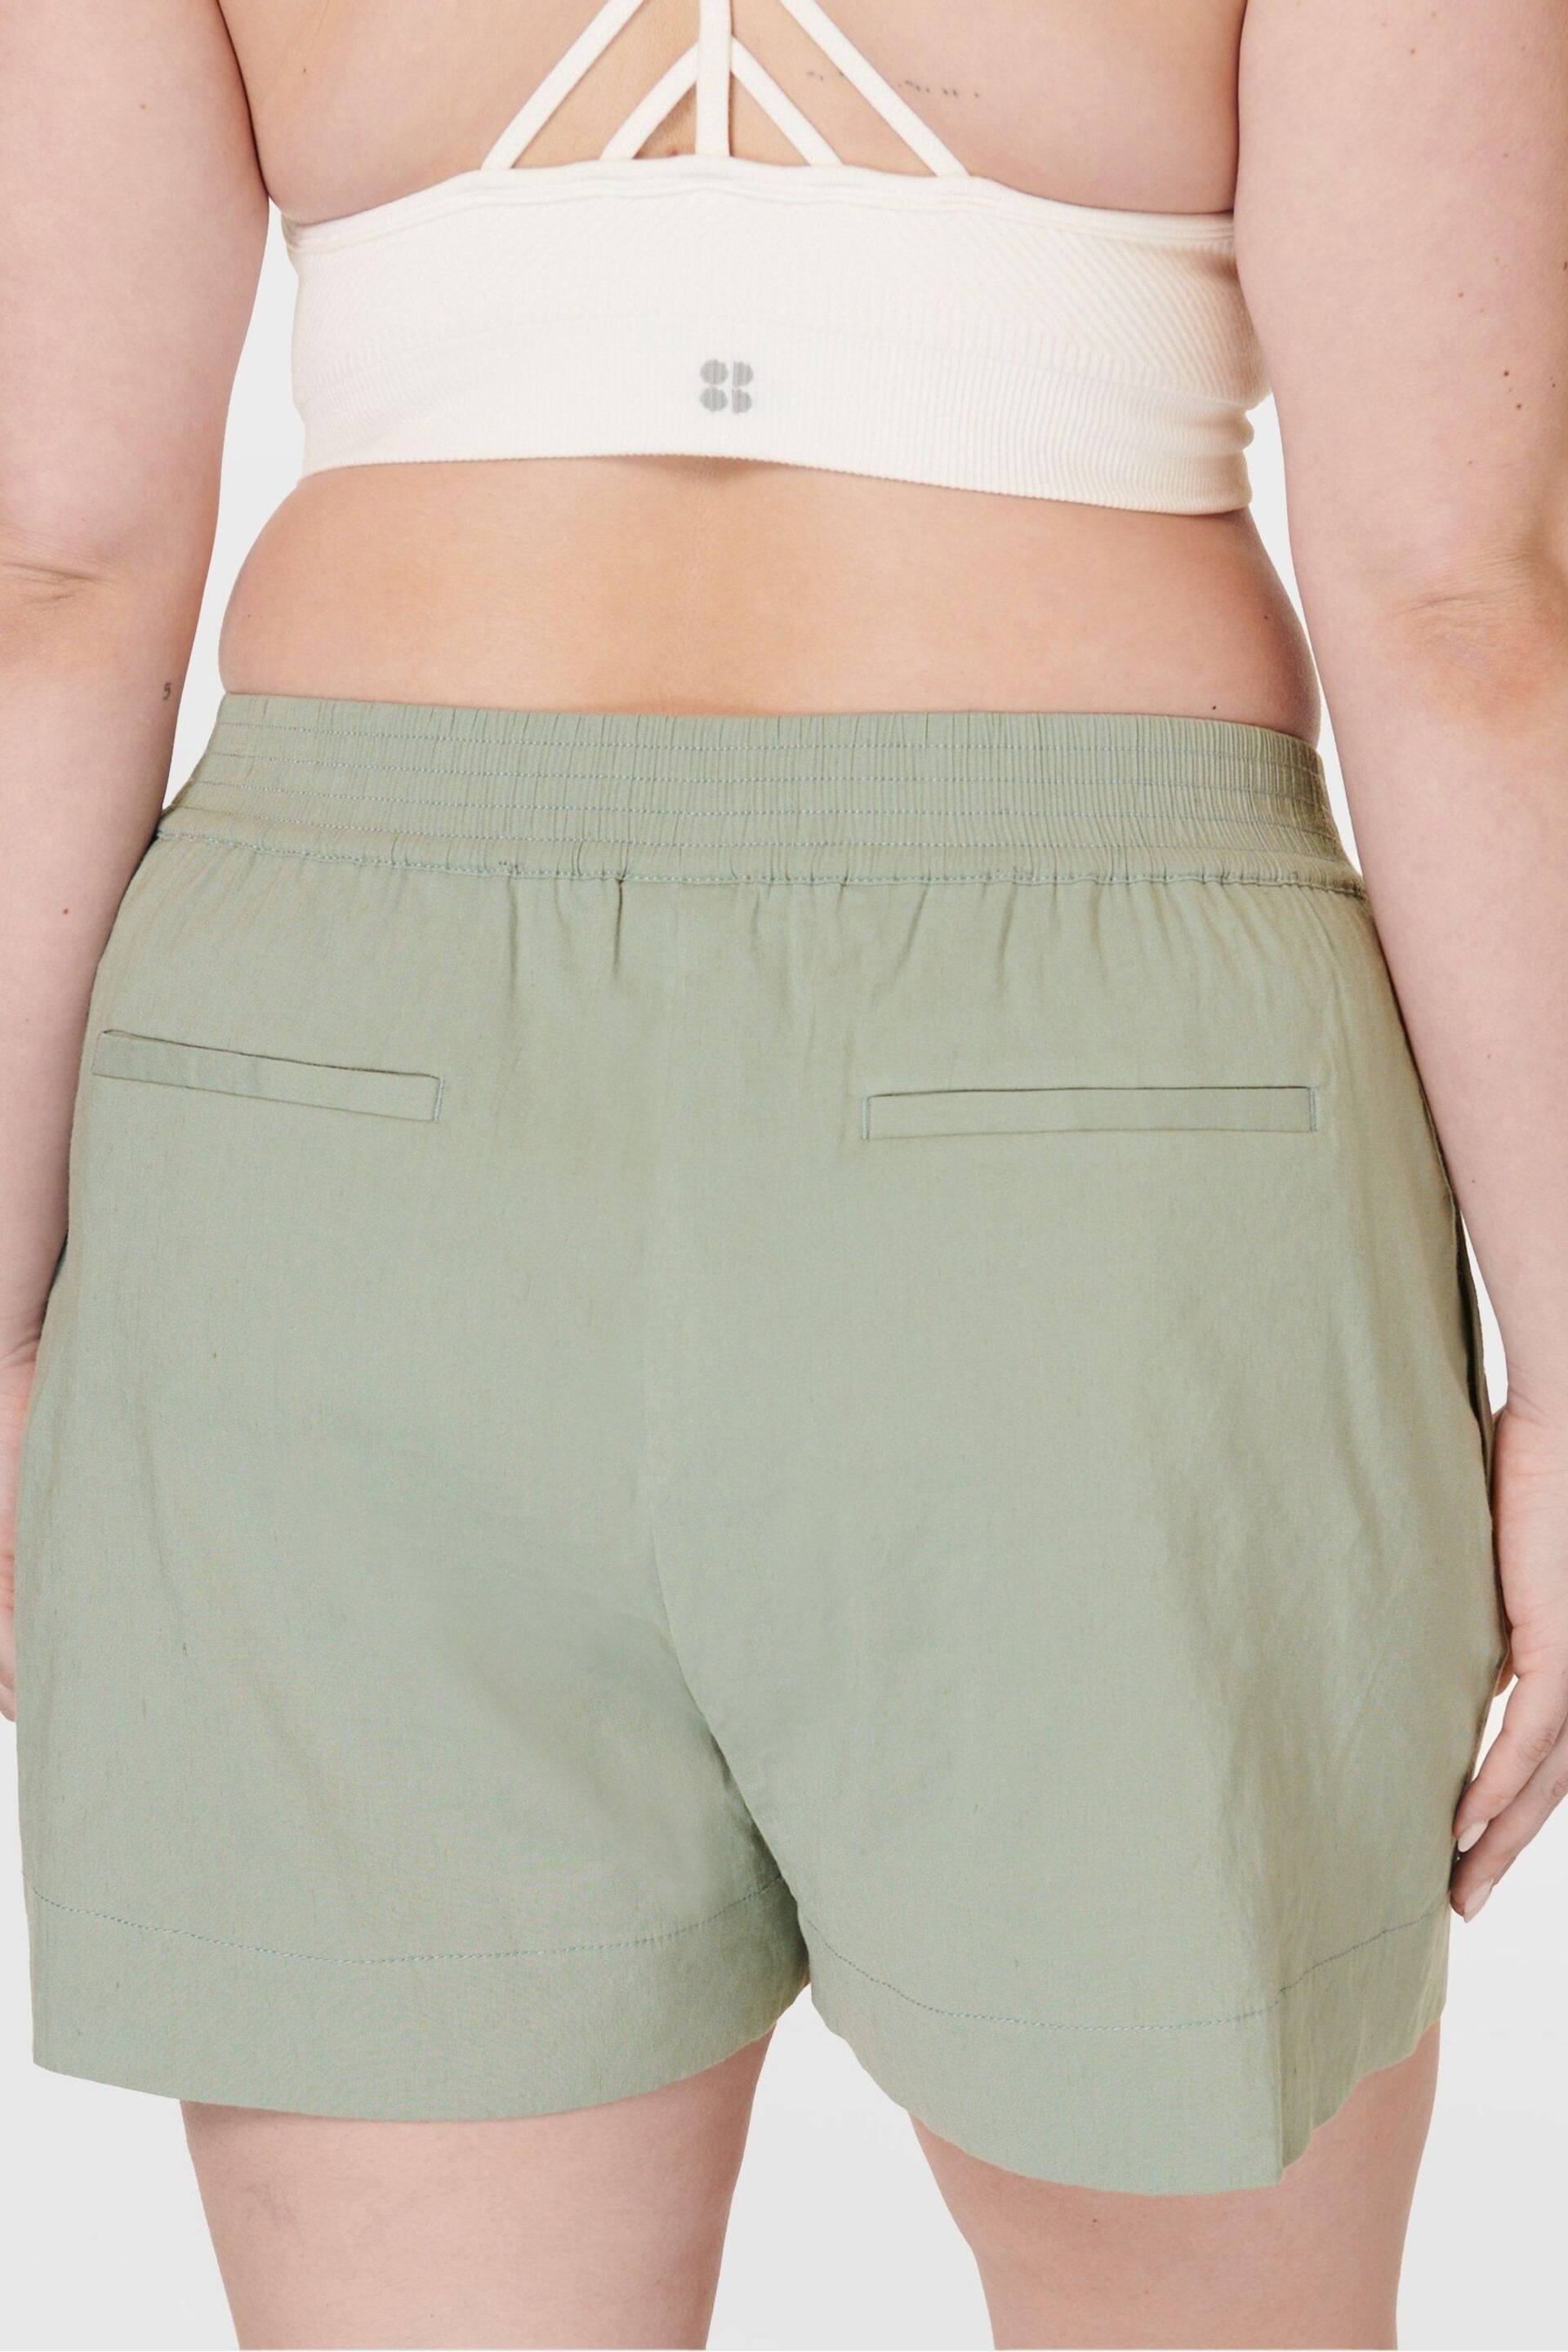 Sweaty Betty Savannah Green Summer Stretch Linen Shorts - Image 3 of 6